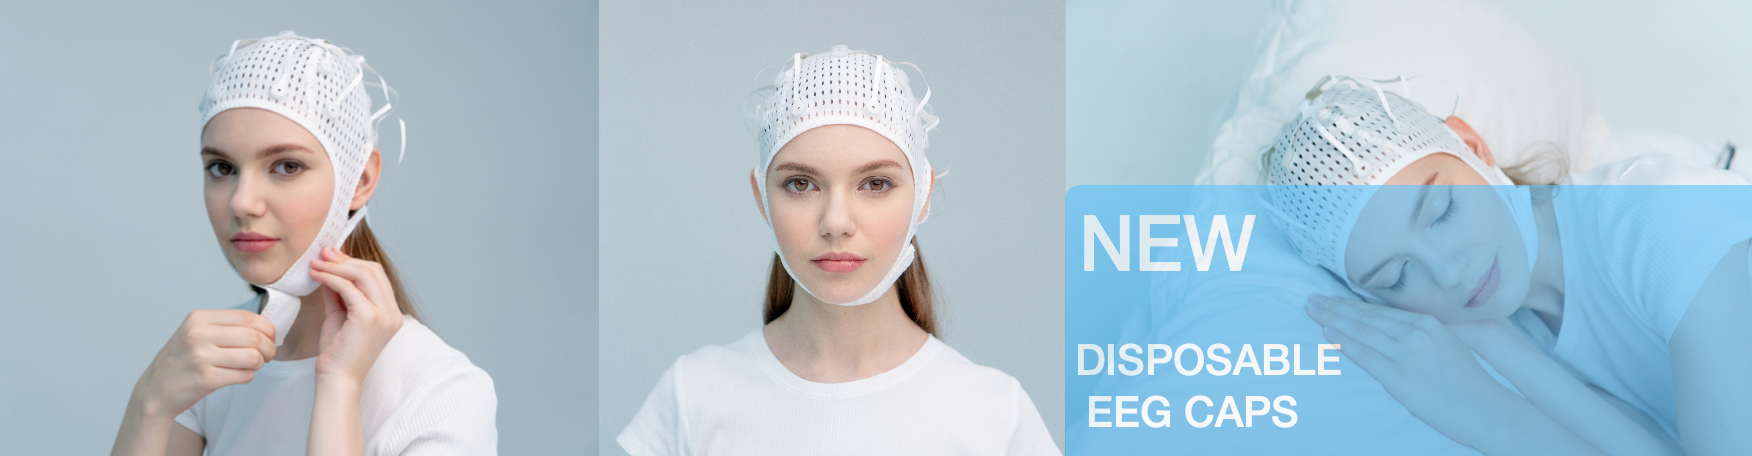 Disposable EEG Caps